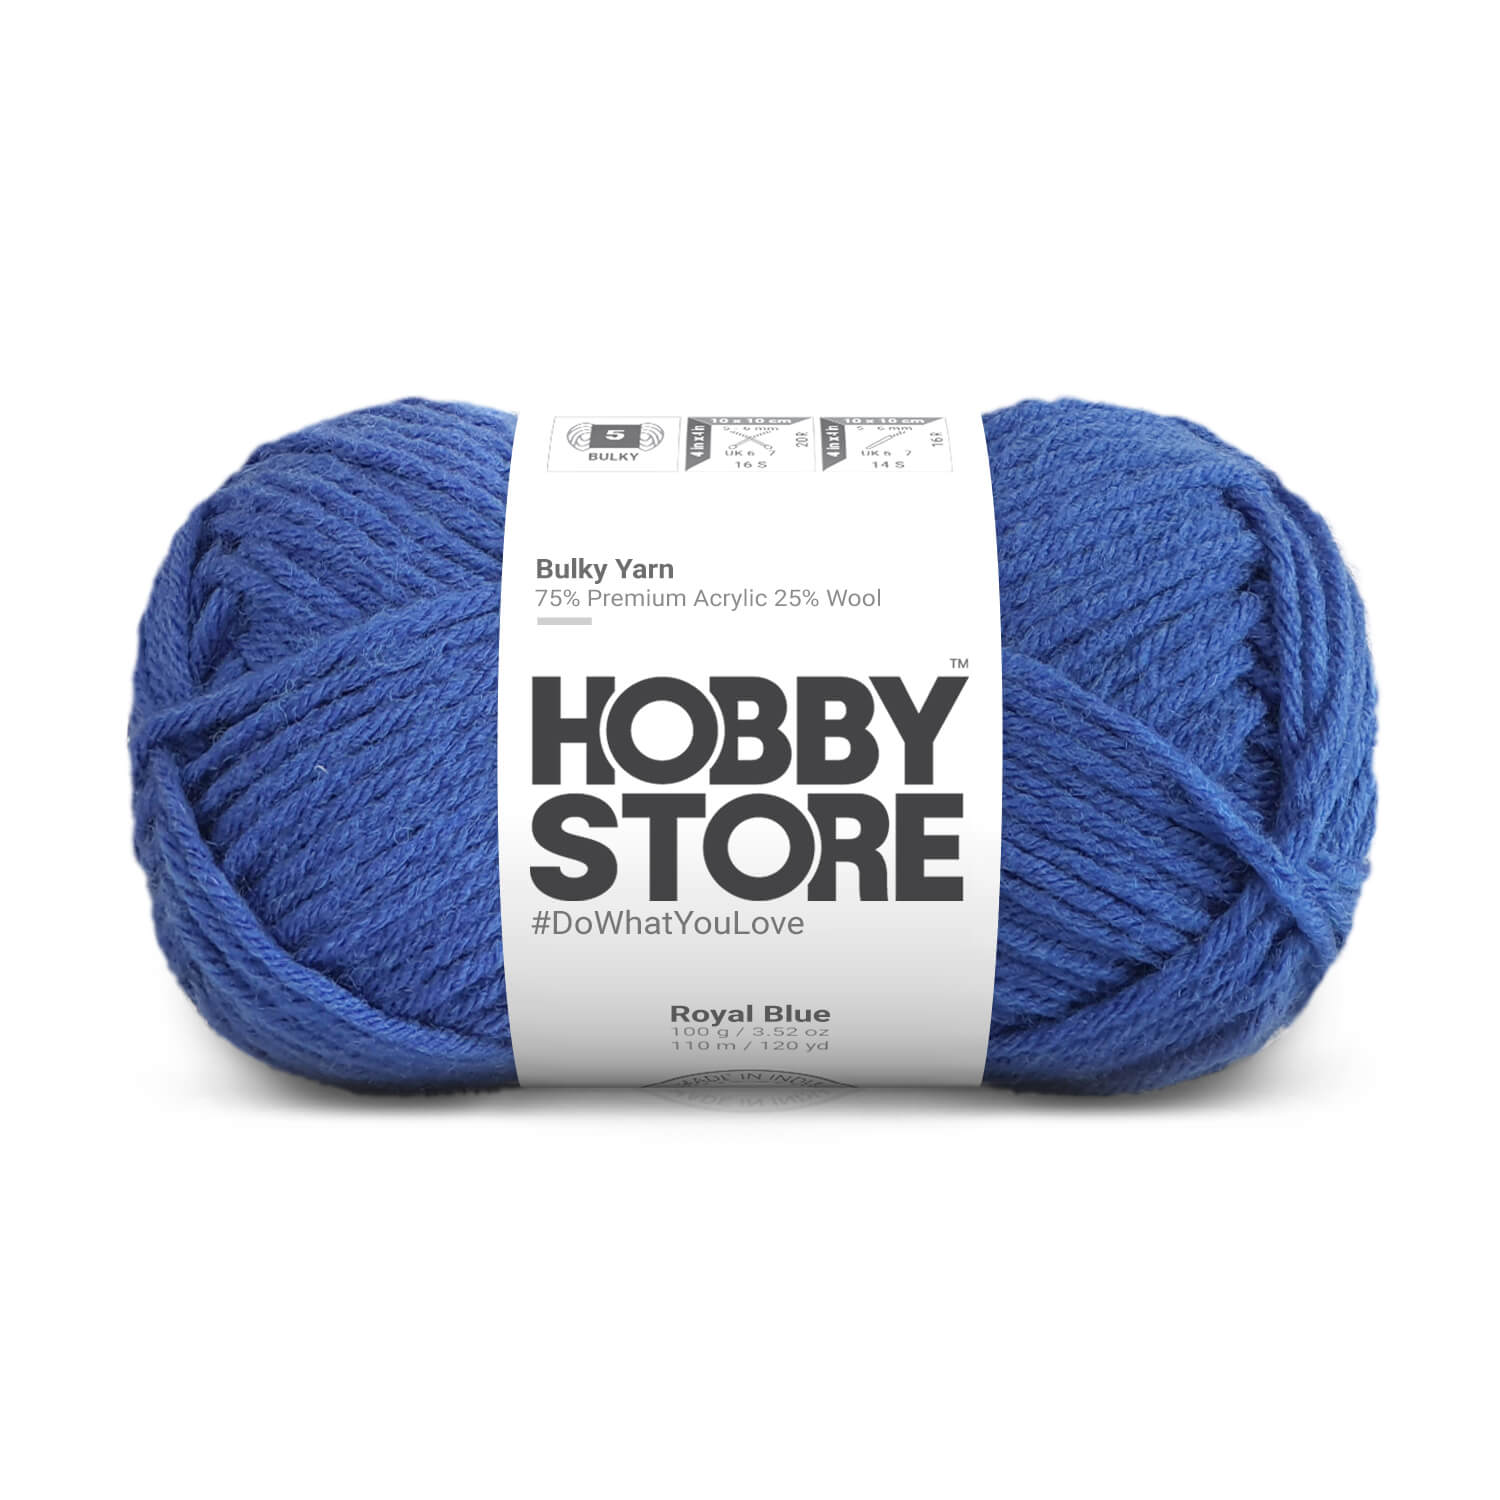 Bulky Yarn by Hobby Store - Royal Blue 6015